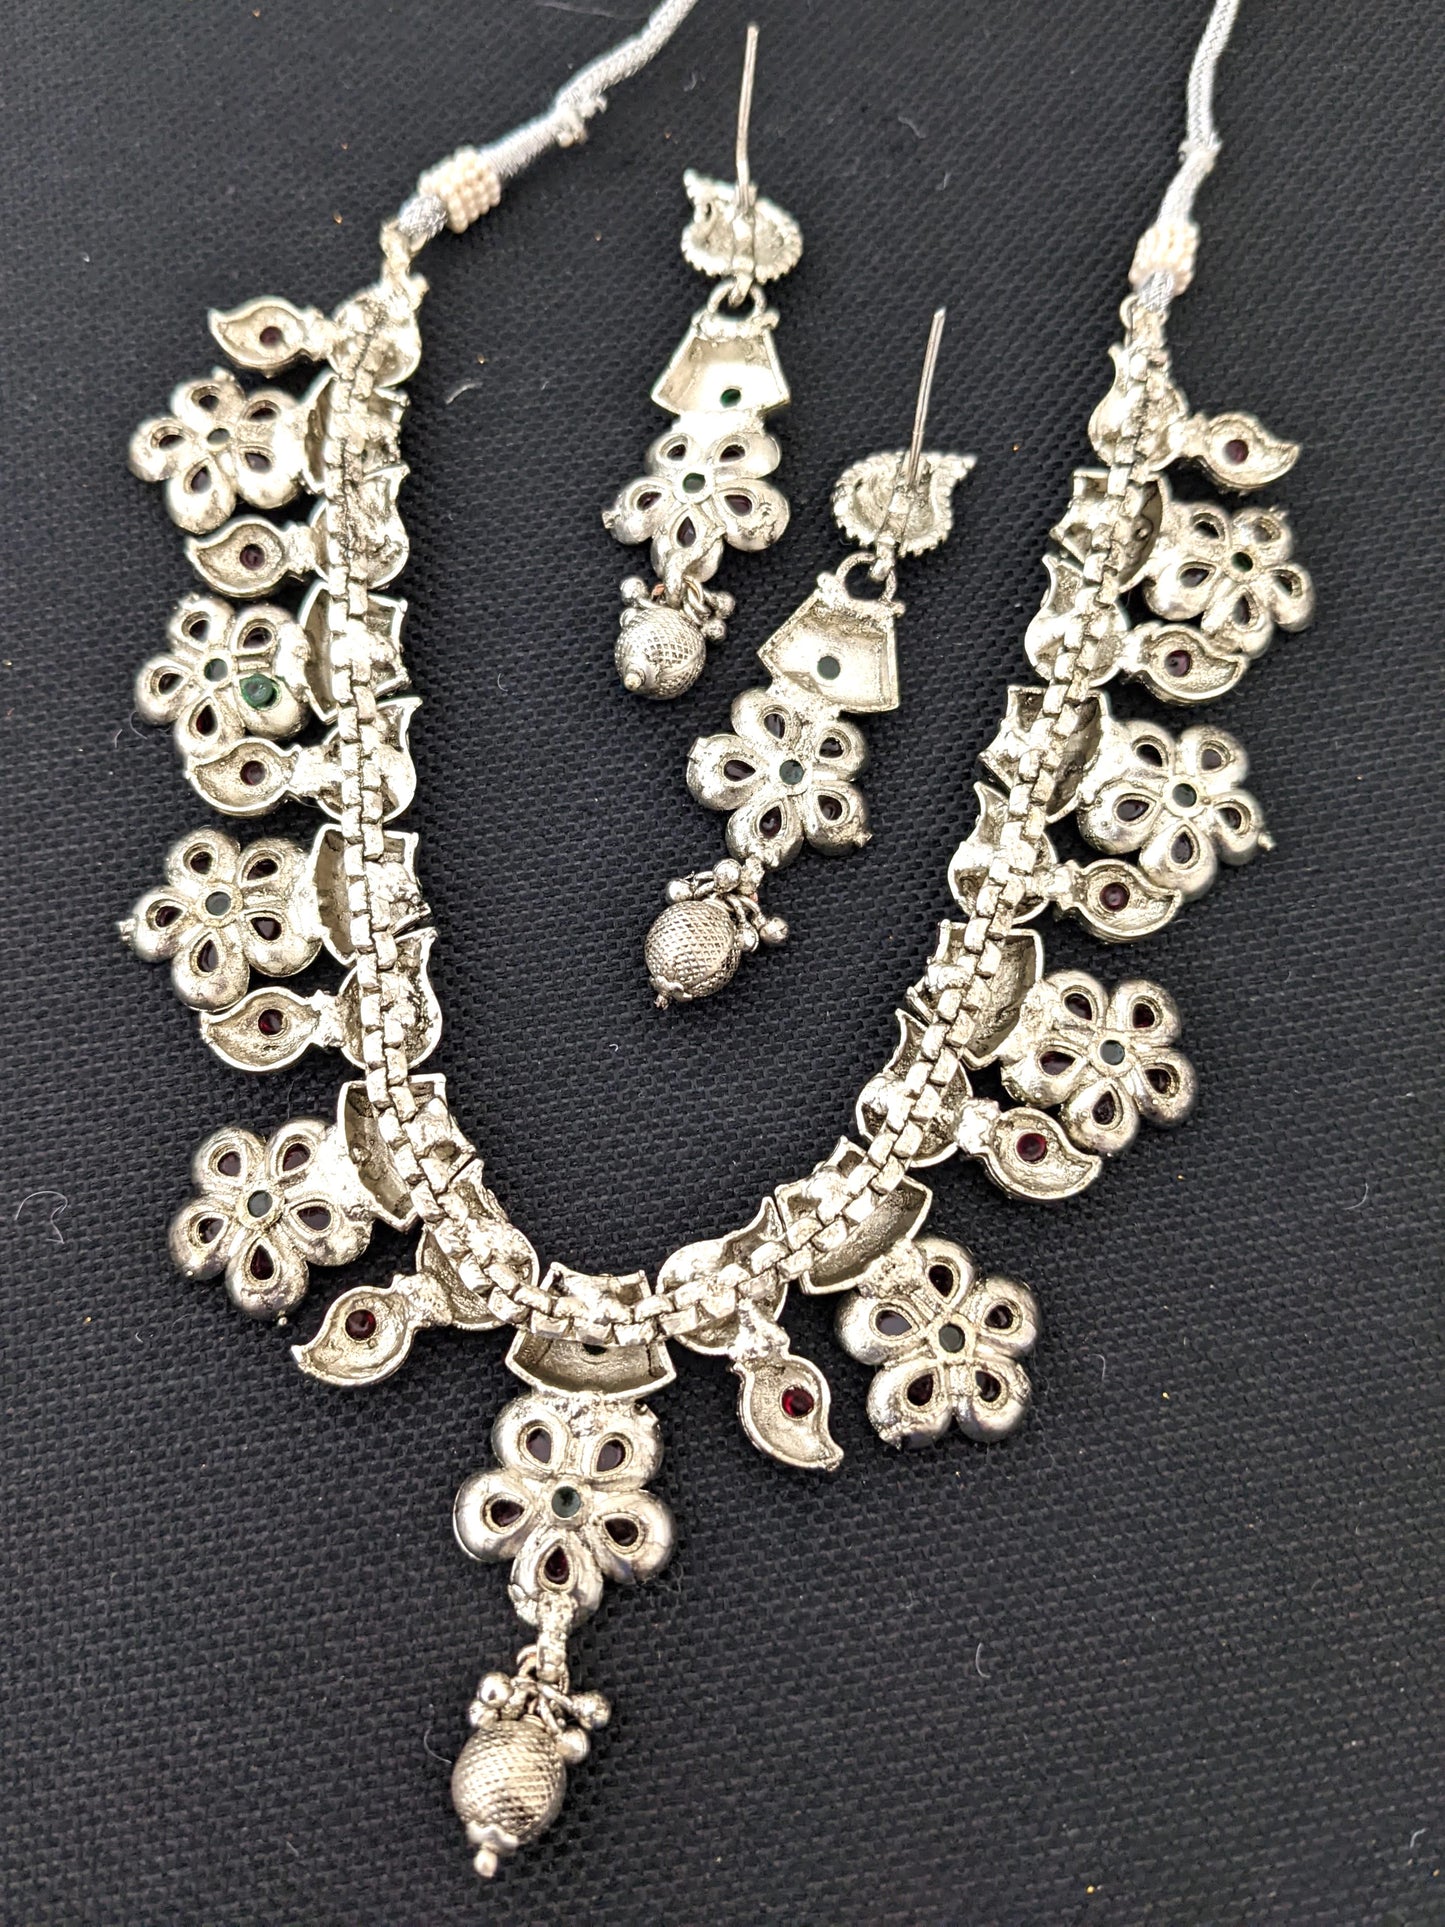 Rhodium Silver flower design kemp choker necklace and earrings set